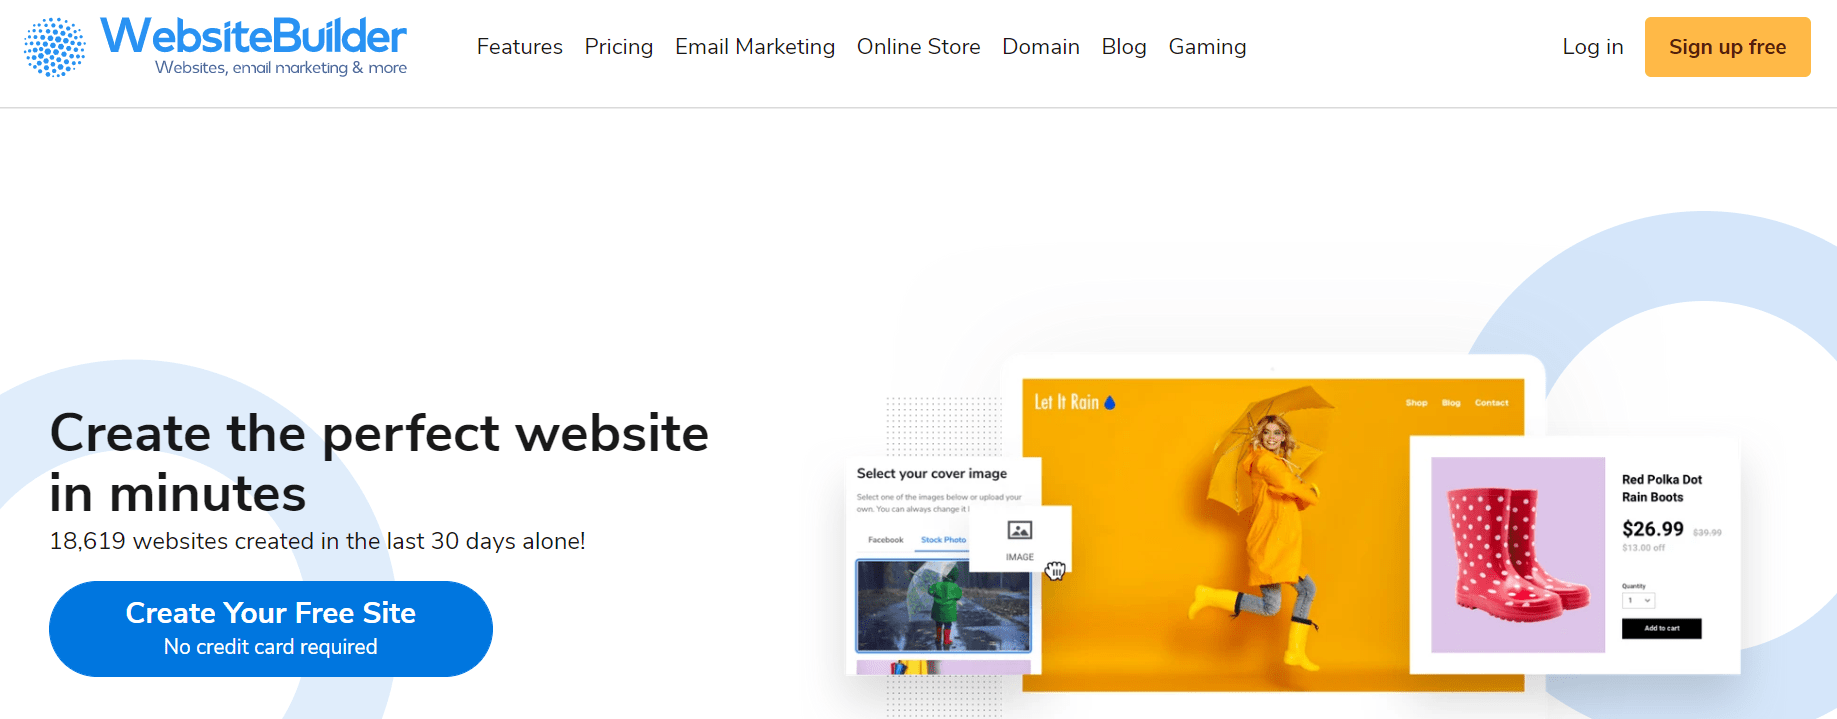 websitebuilder hosting